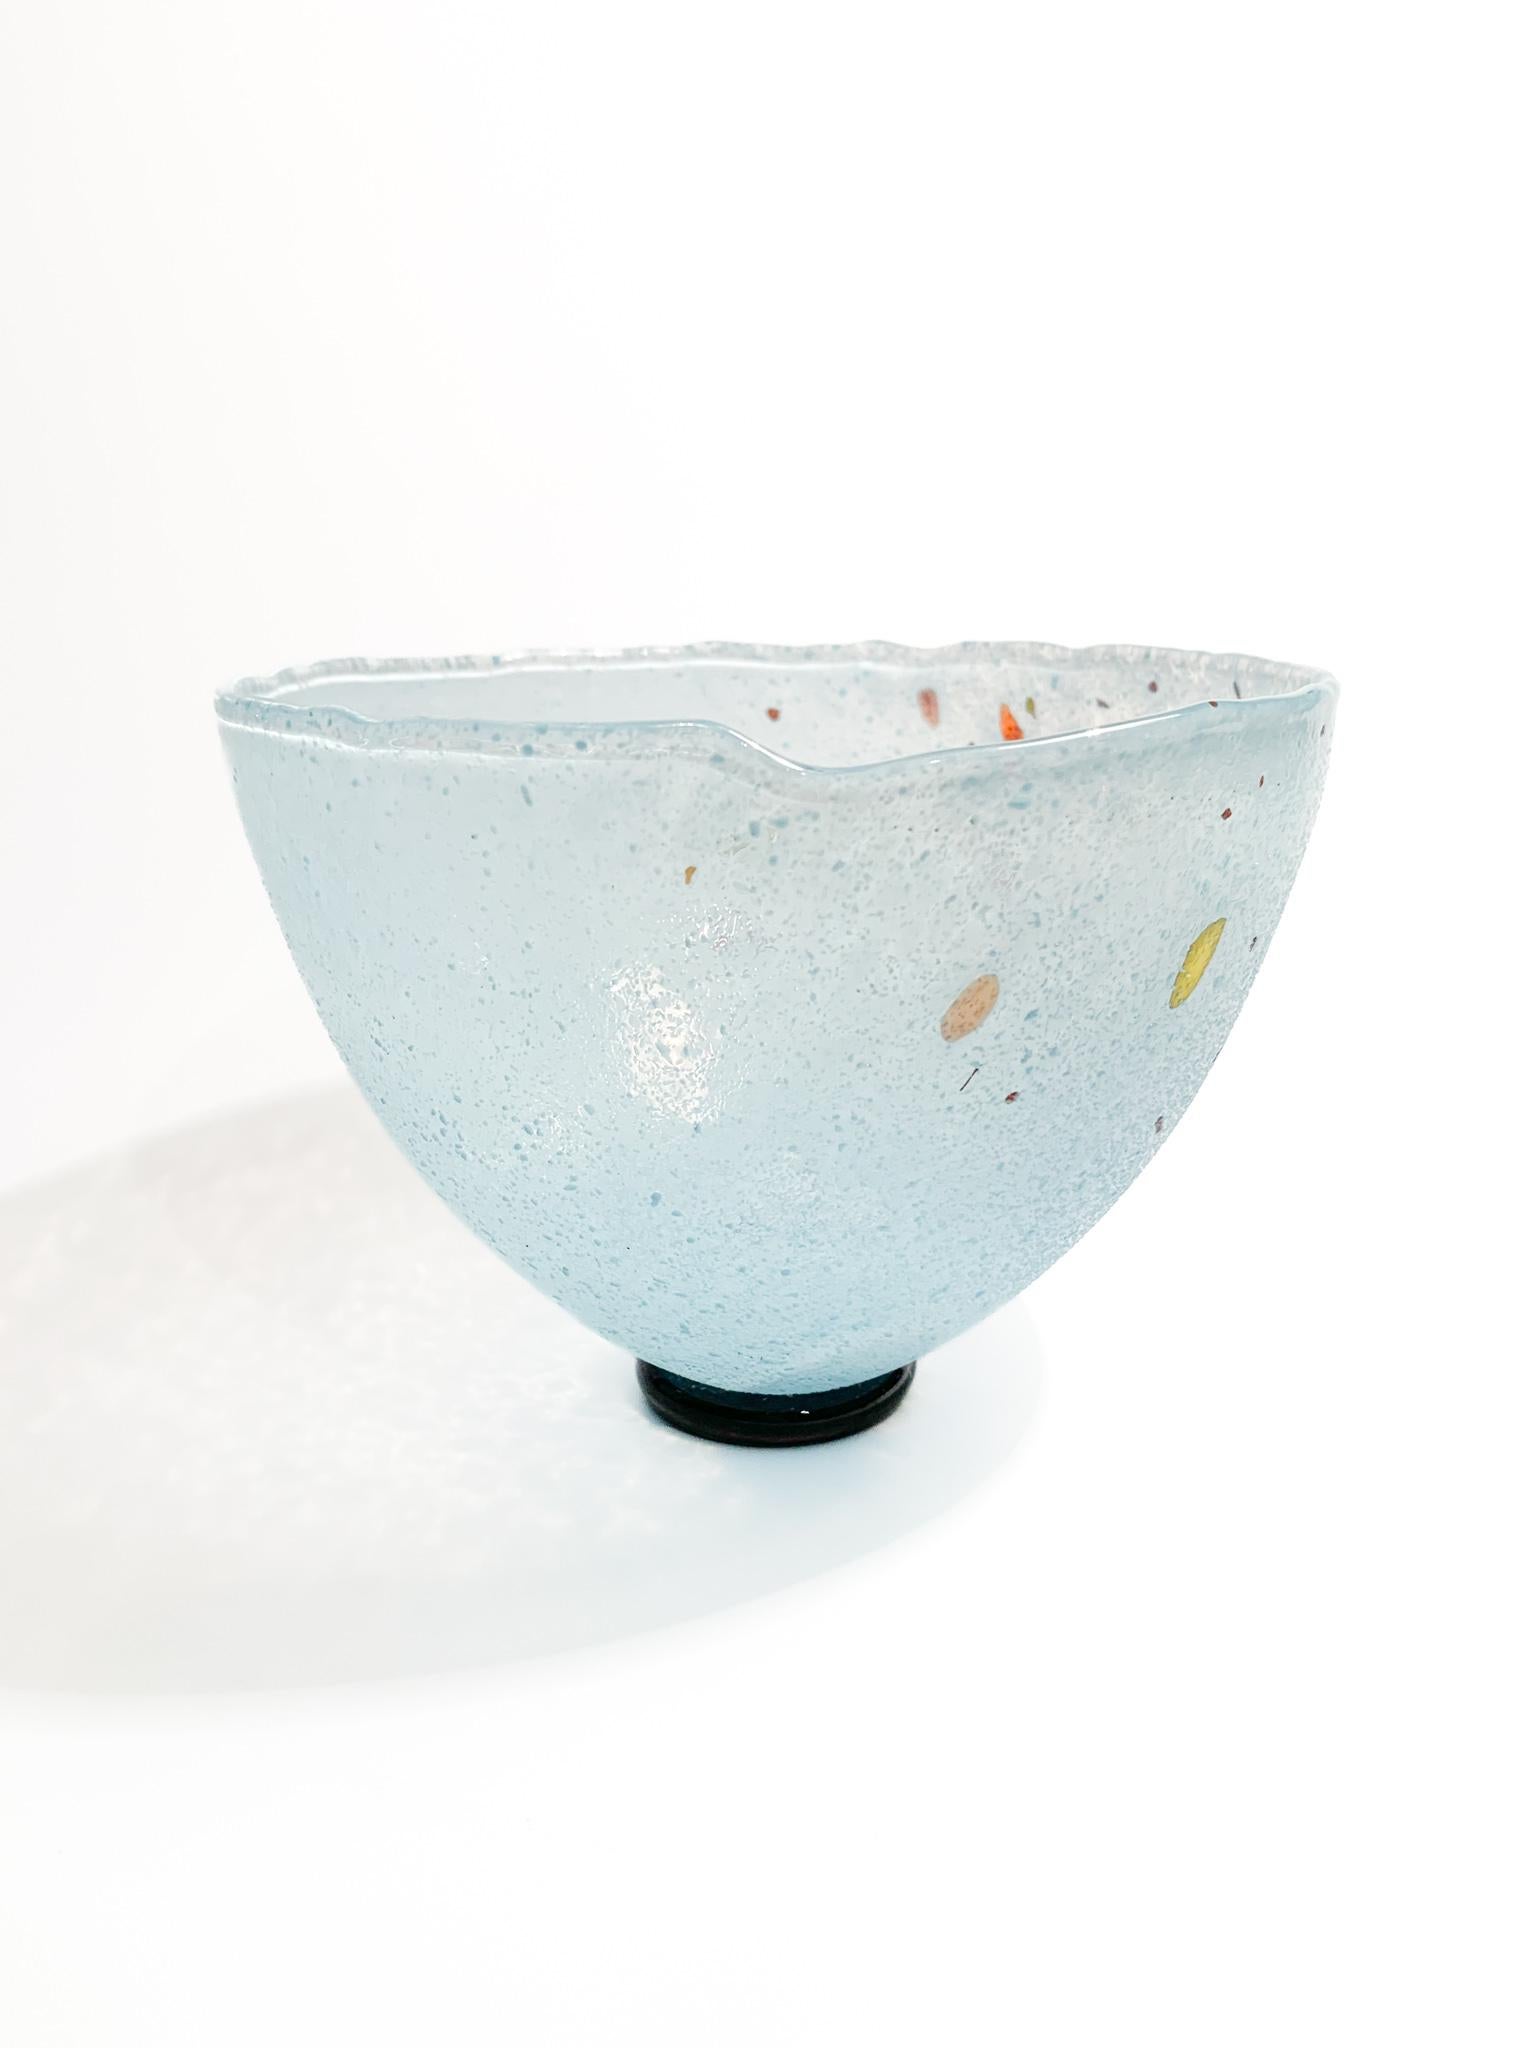 Light blue glass bowl by Kosta Soda, made by Bertil Vallien in the 1990s

Ø 16 cm h 12 cm